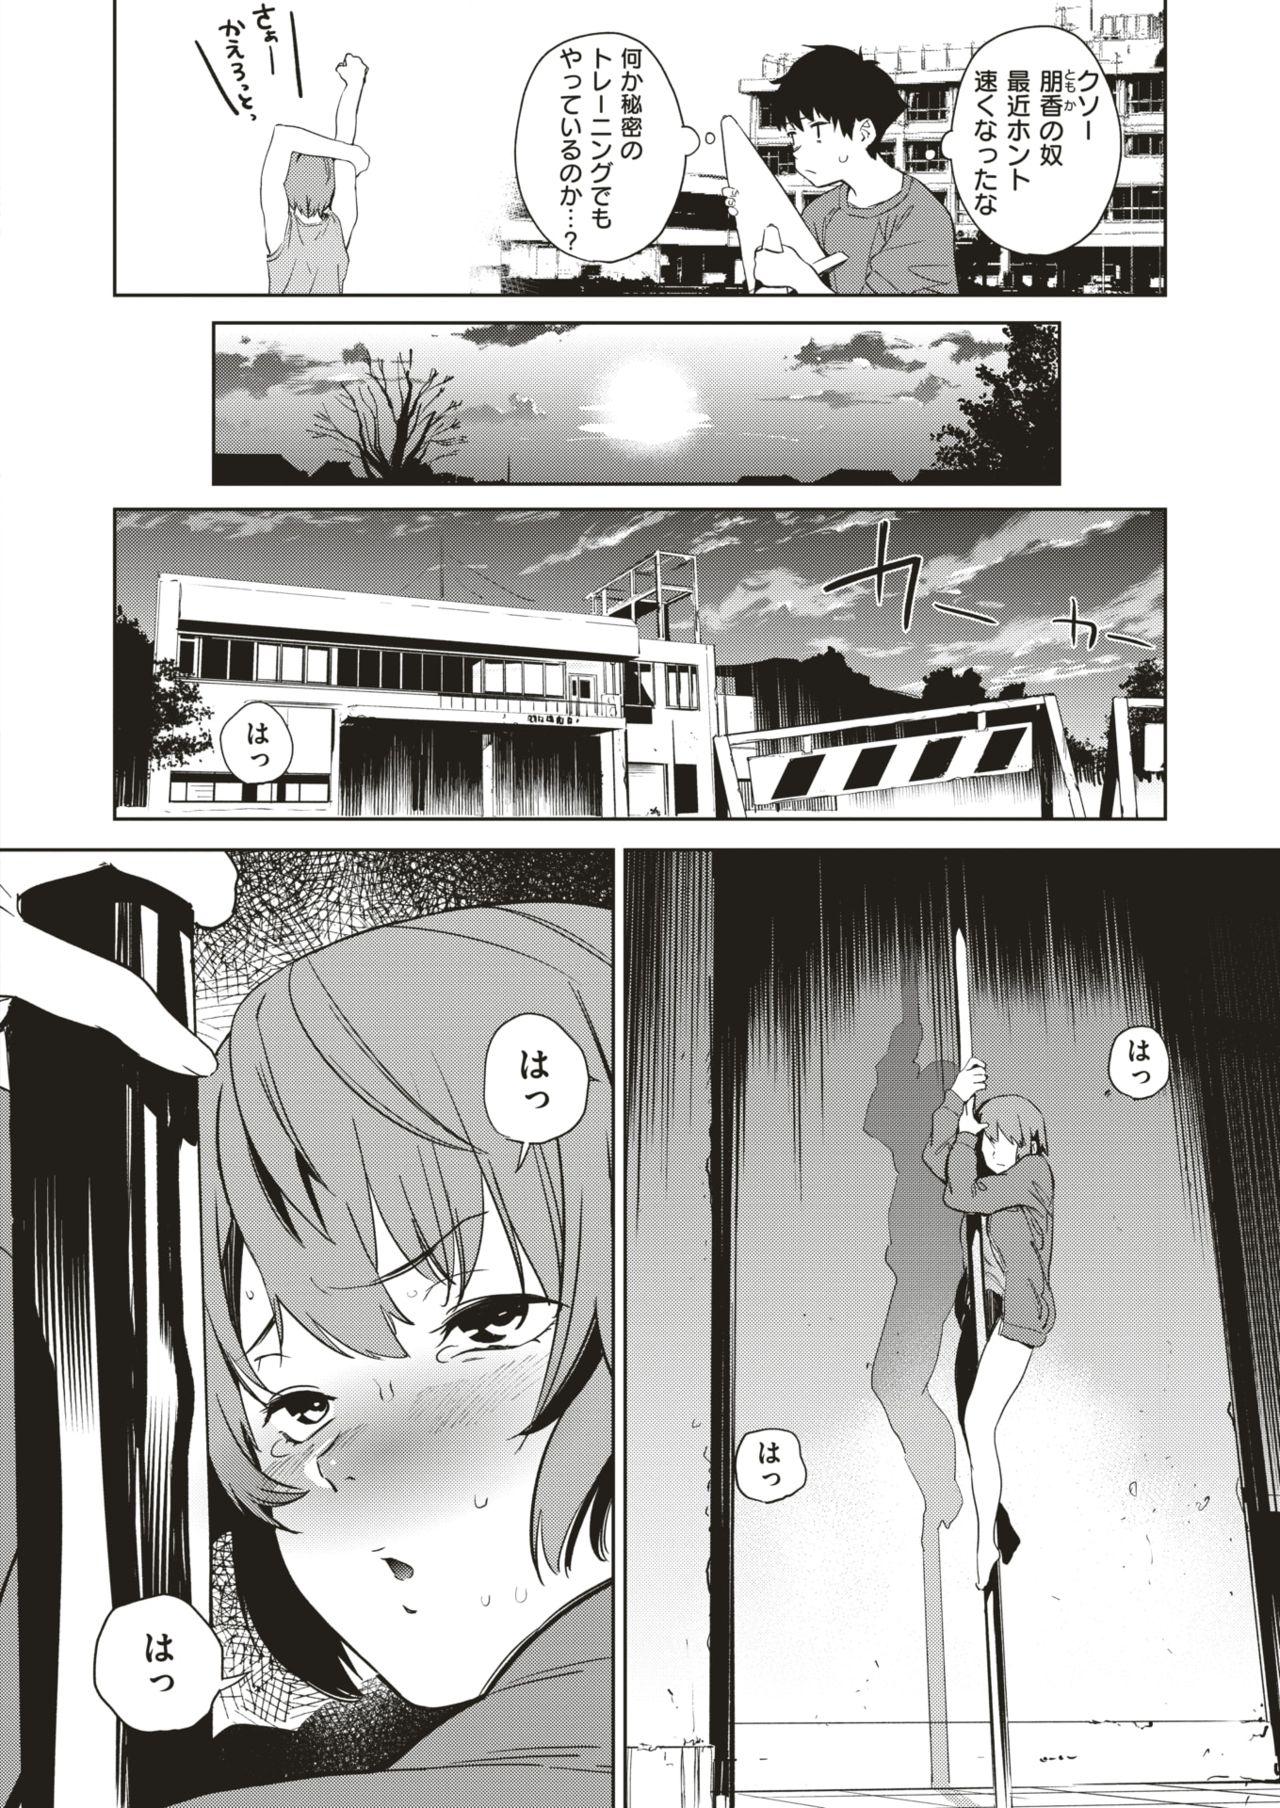 Japan COMIC HAPPINING Vol. 1 Spread - Page 12